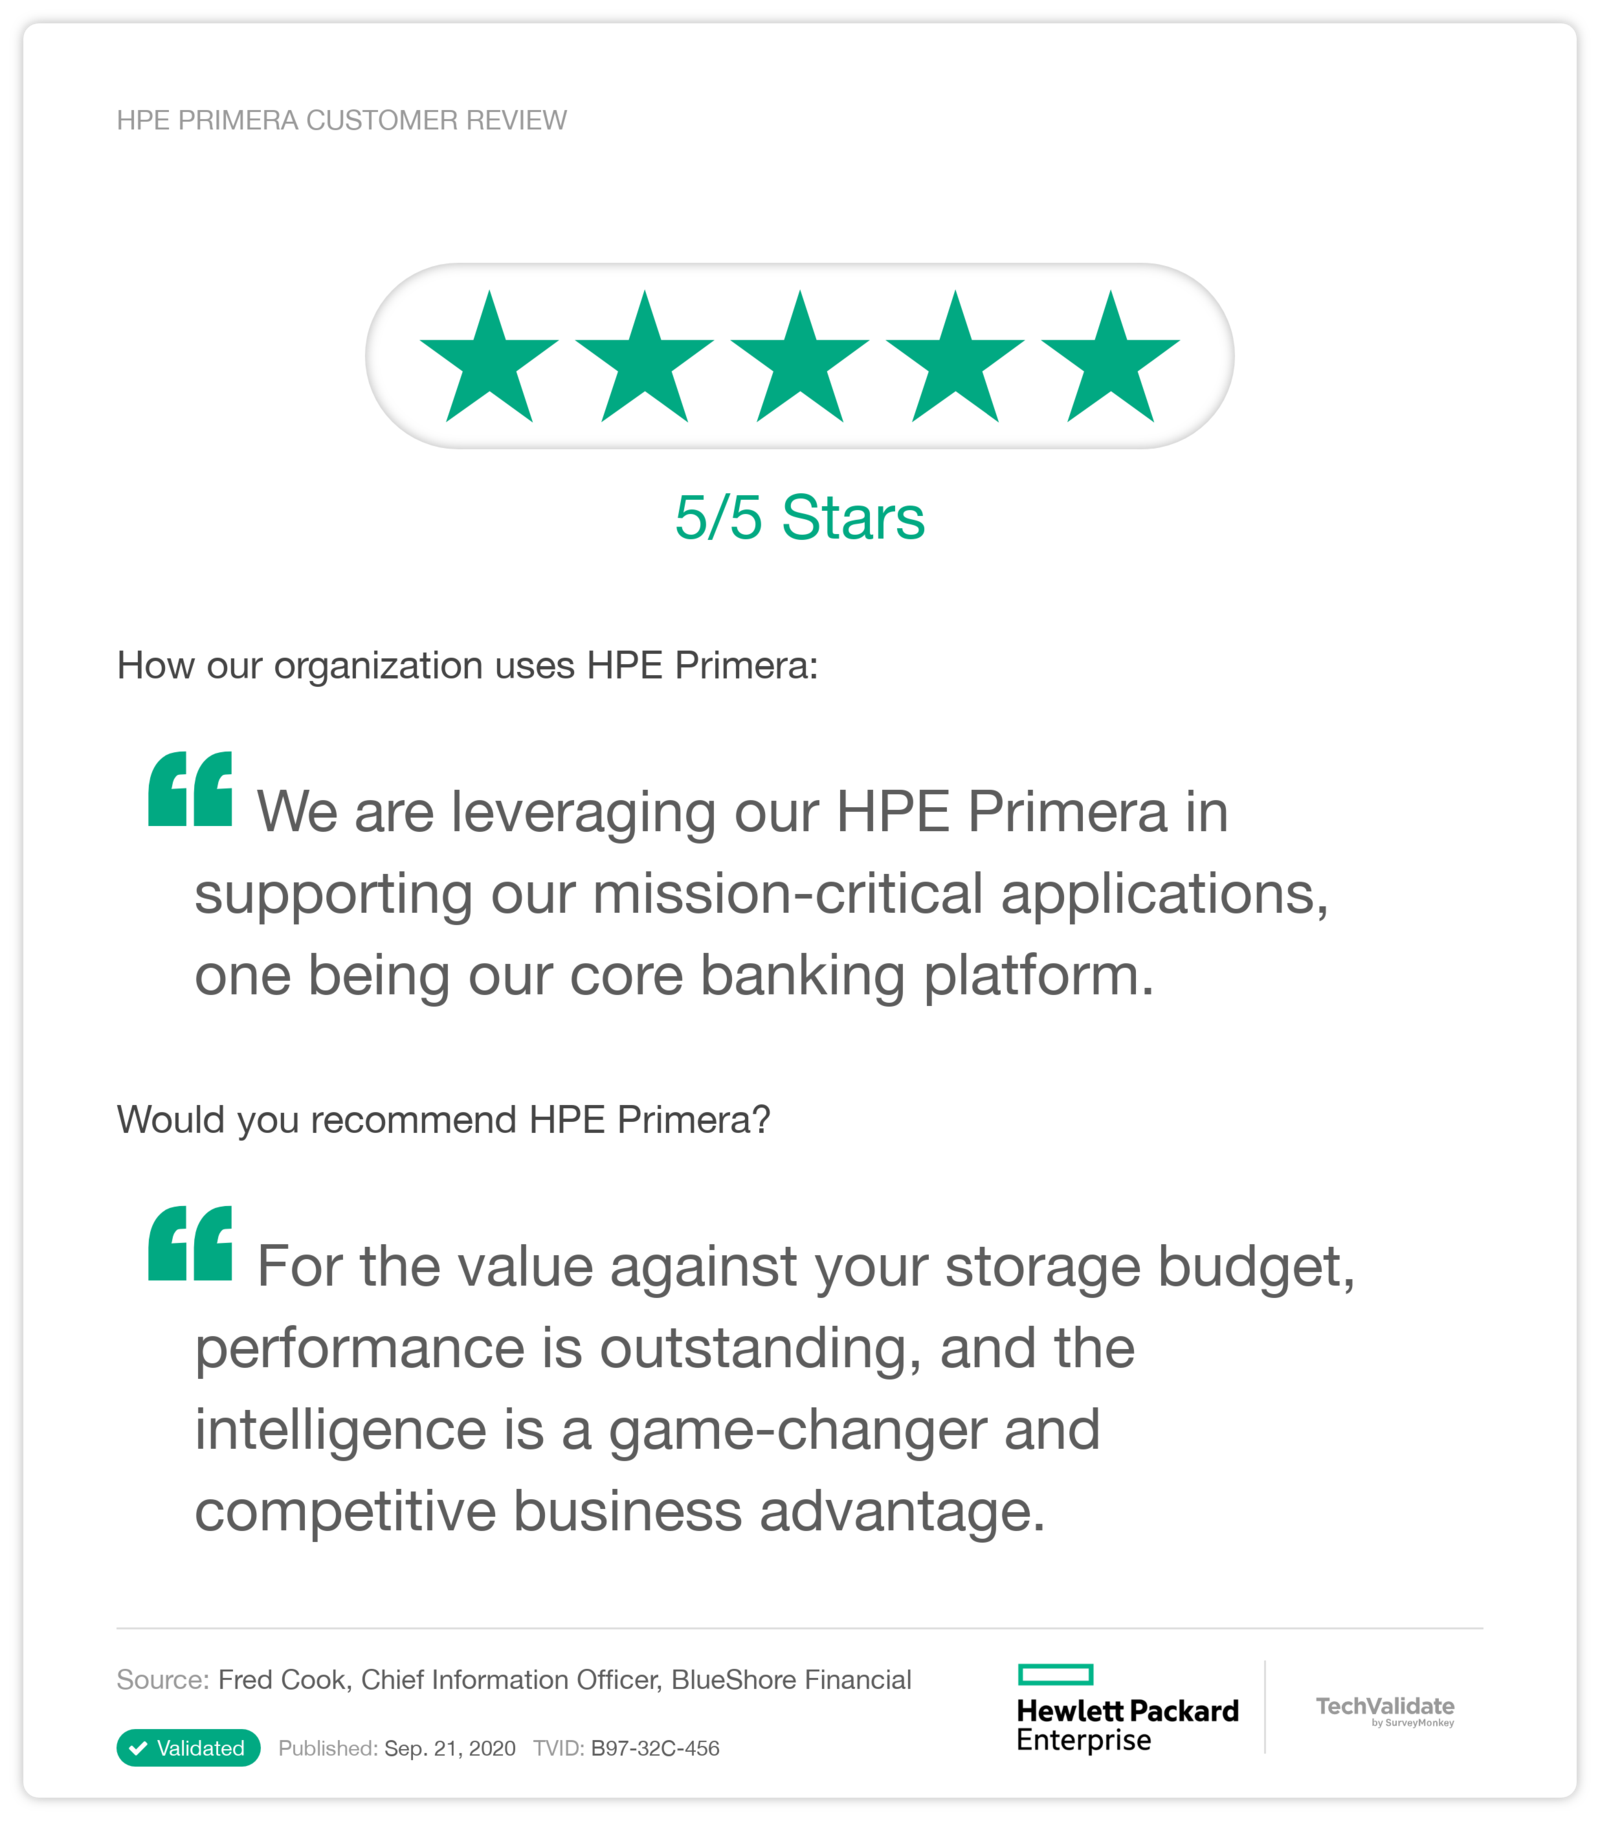 HPE Primera Customer Review